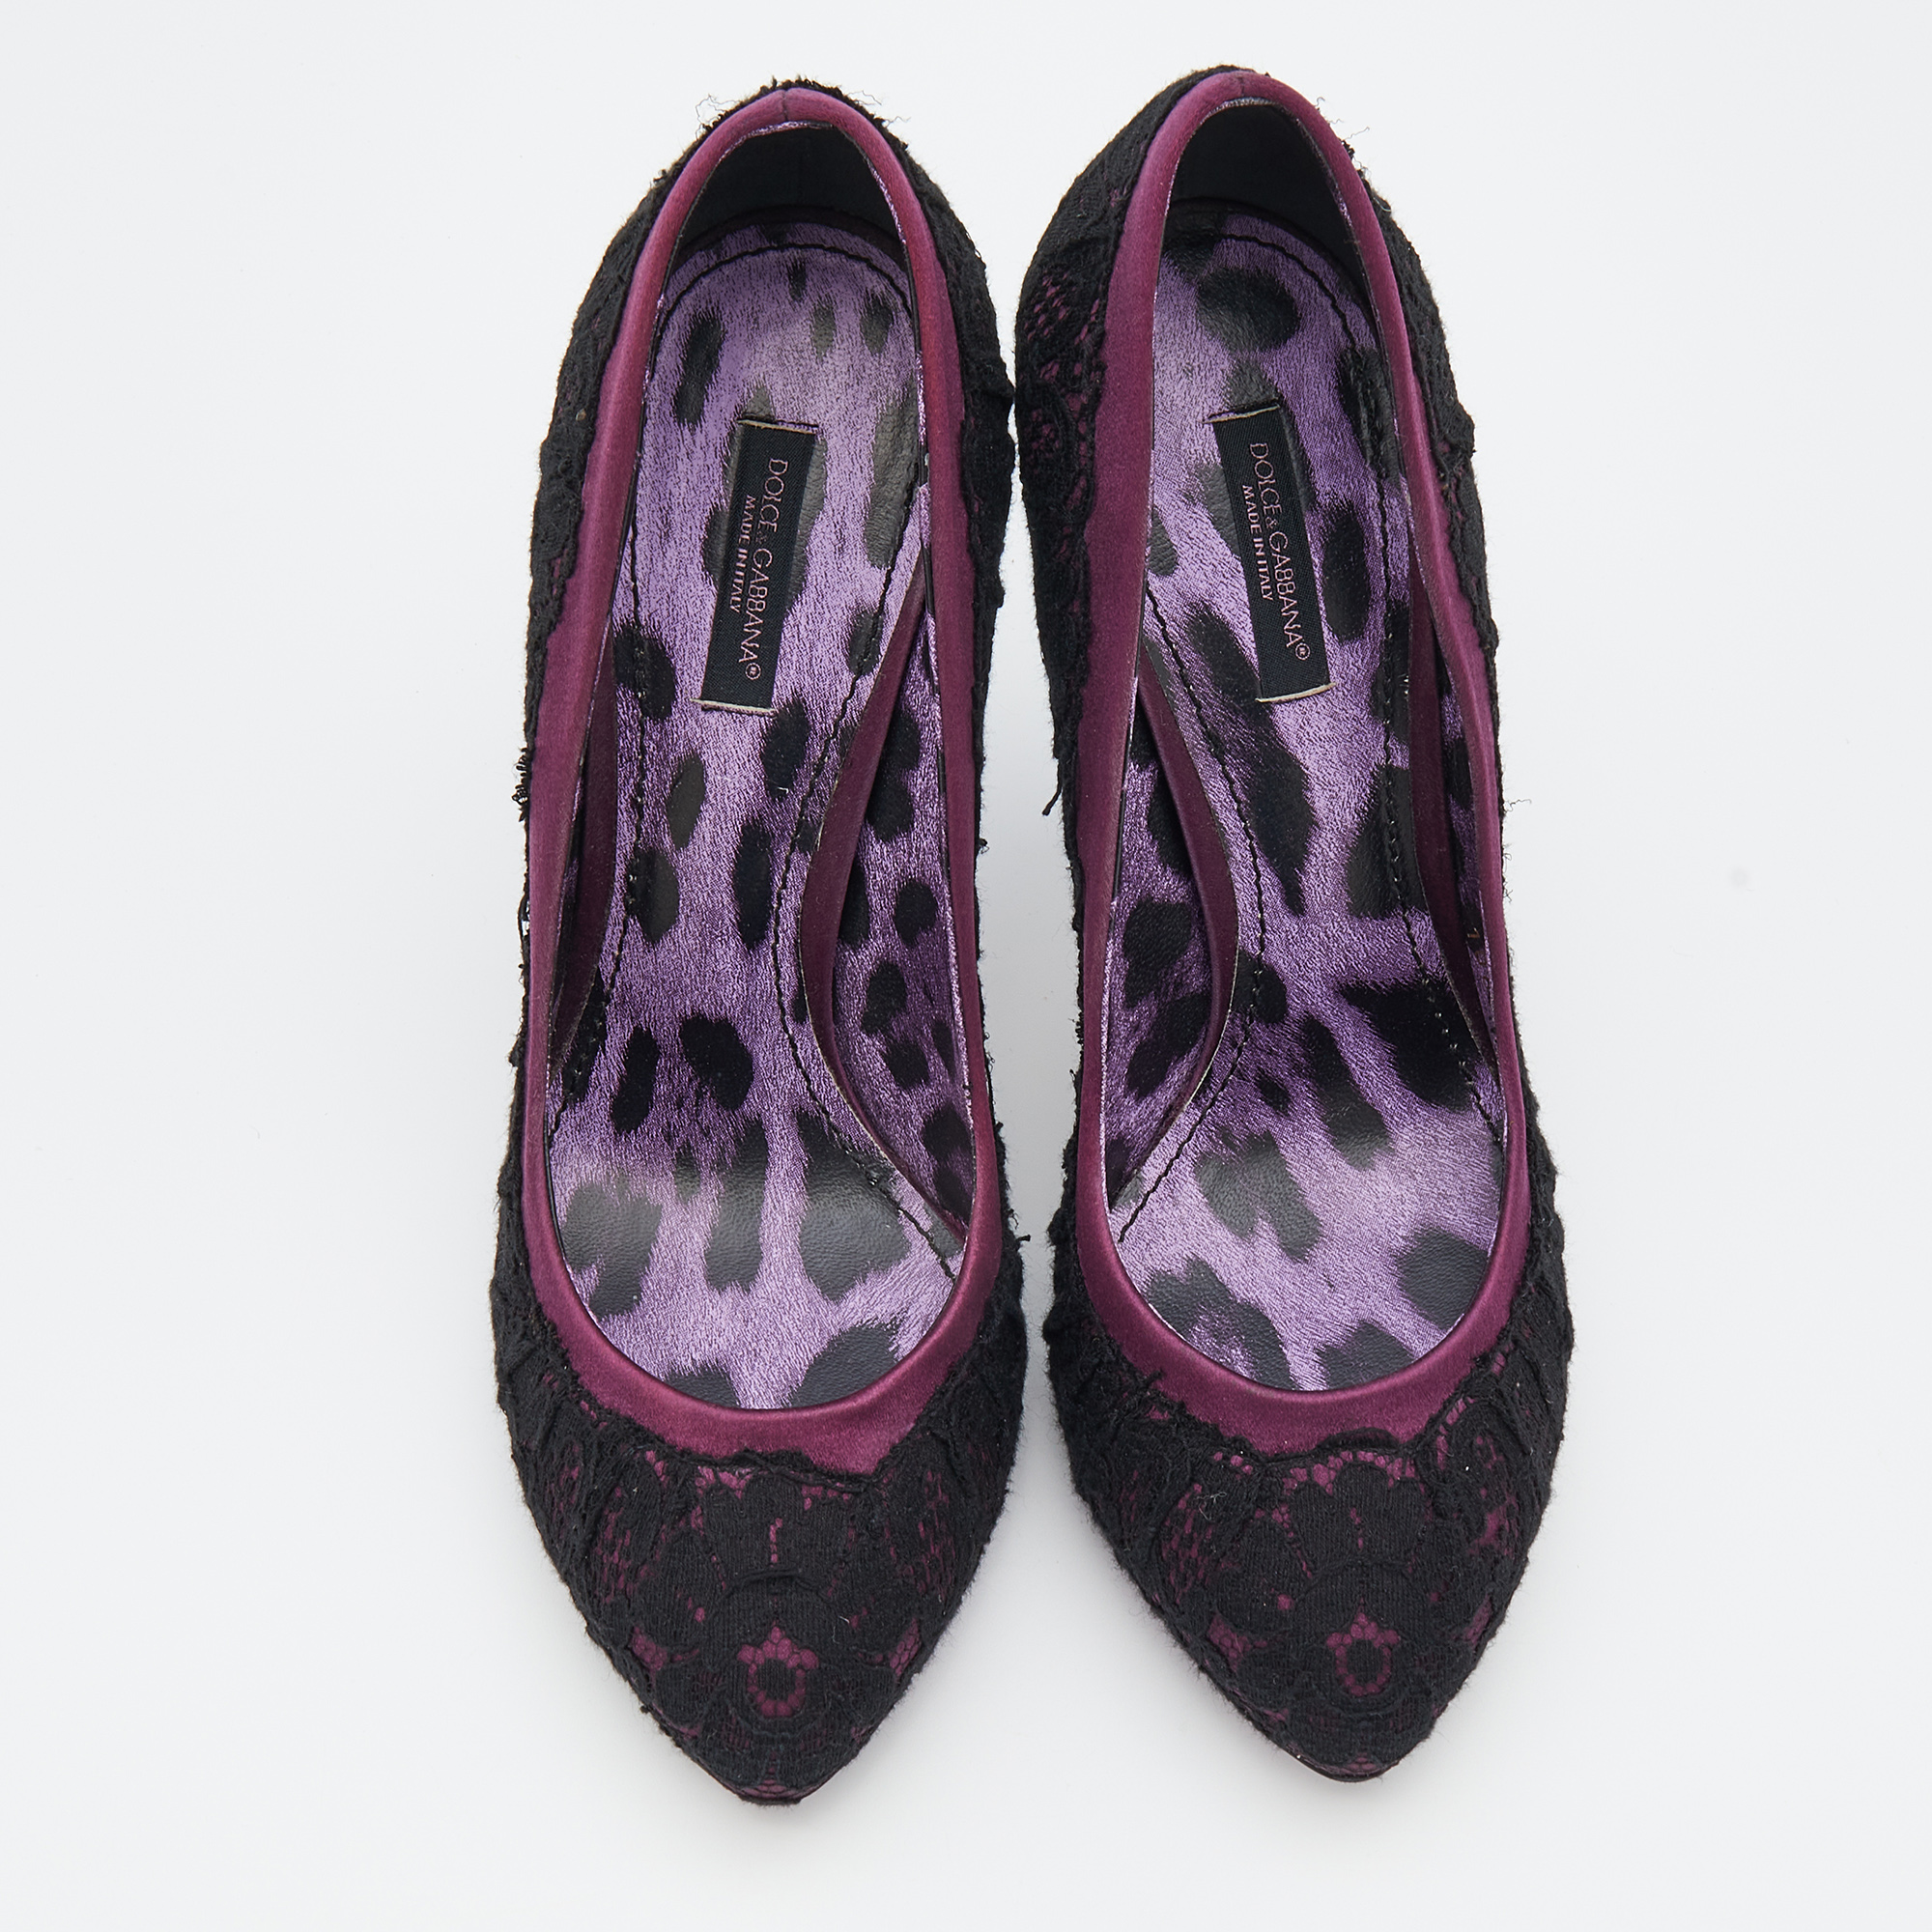 Dolce & Gabbana Purple/Black Lace And Satin Platform Pumps Size 39